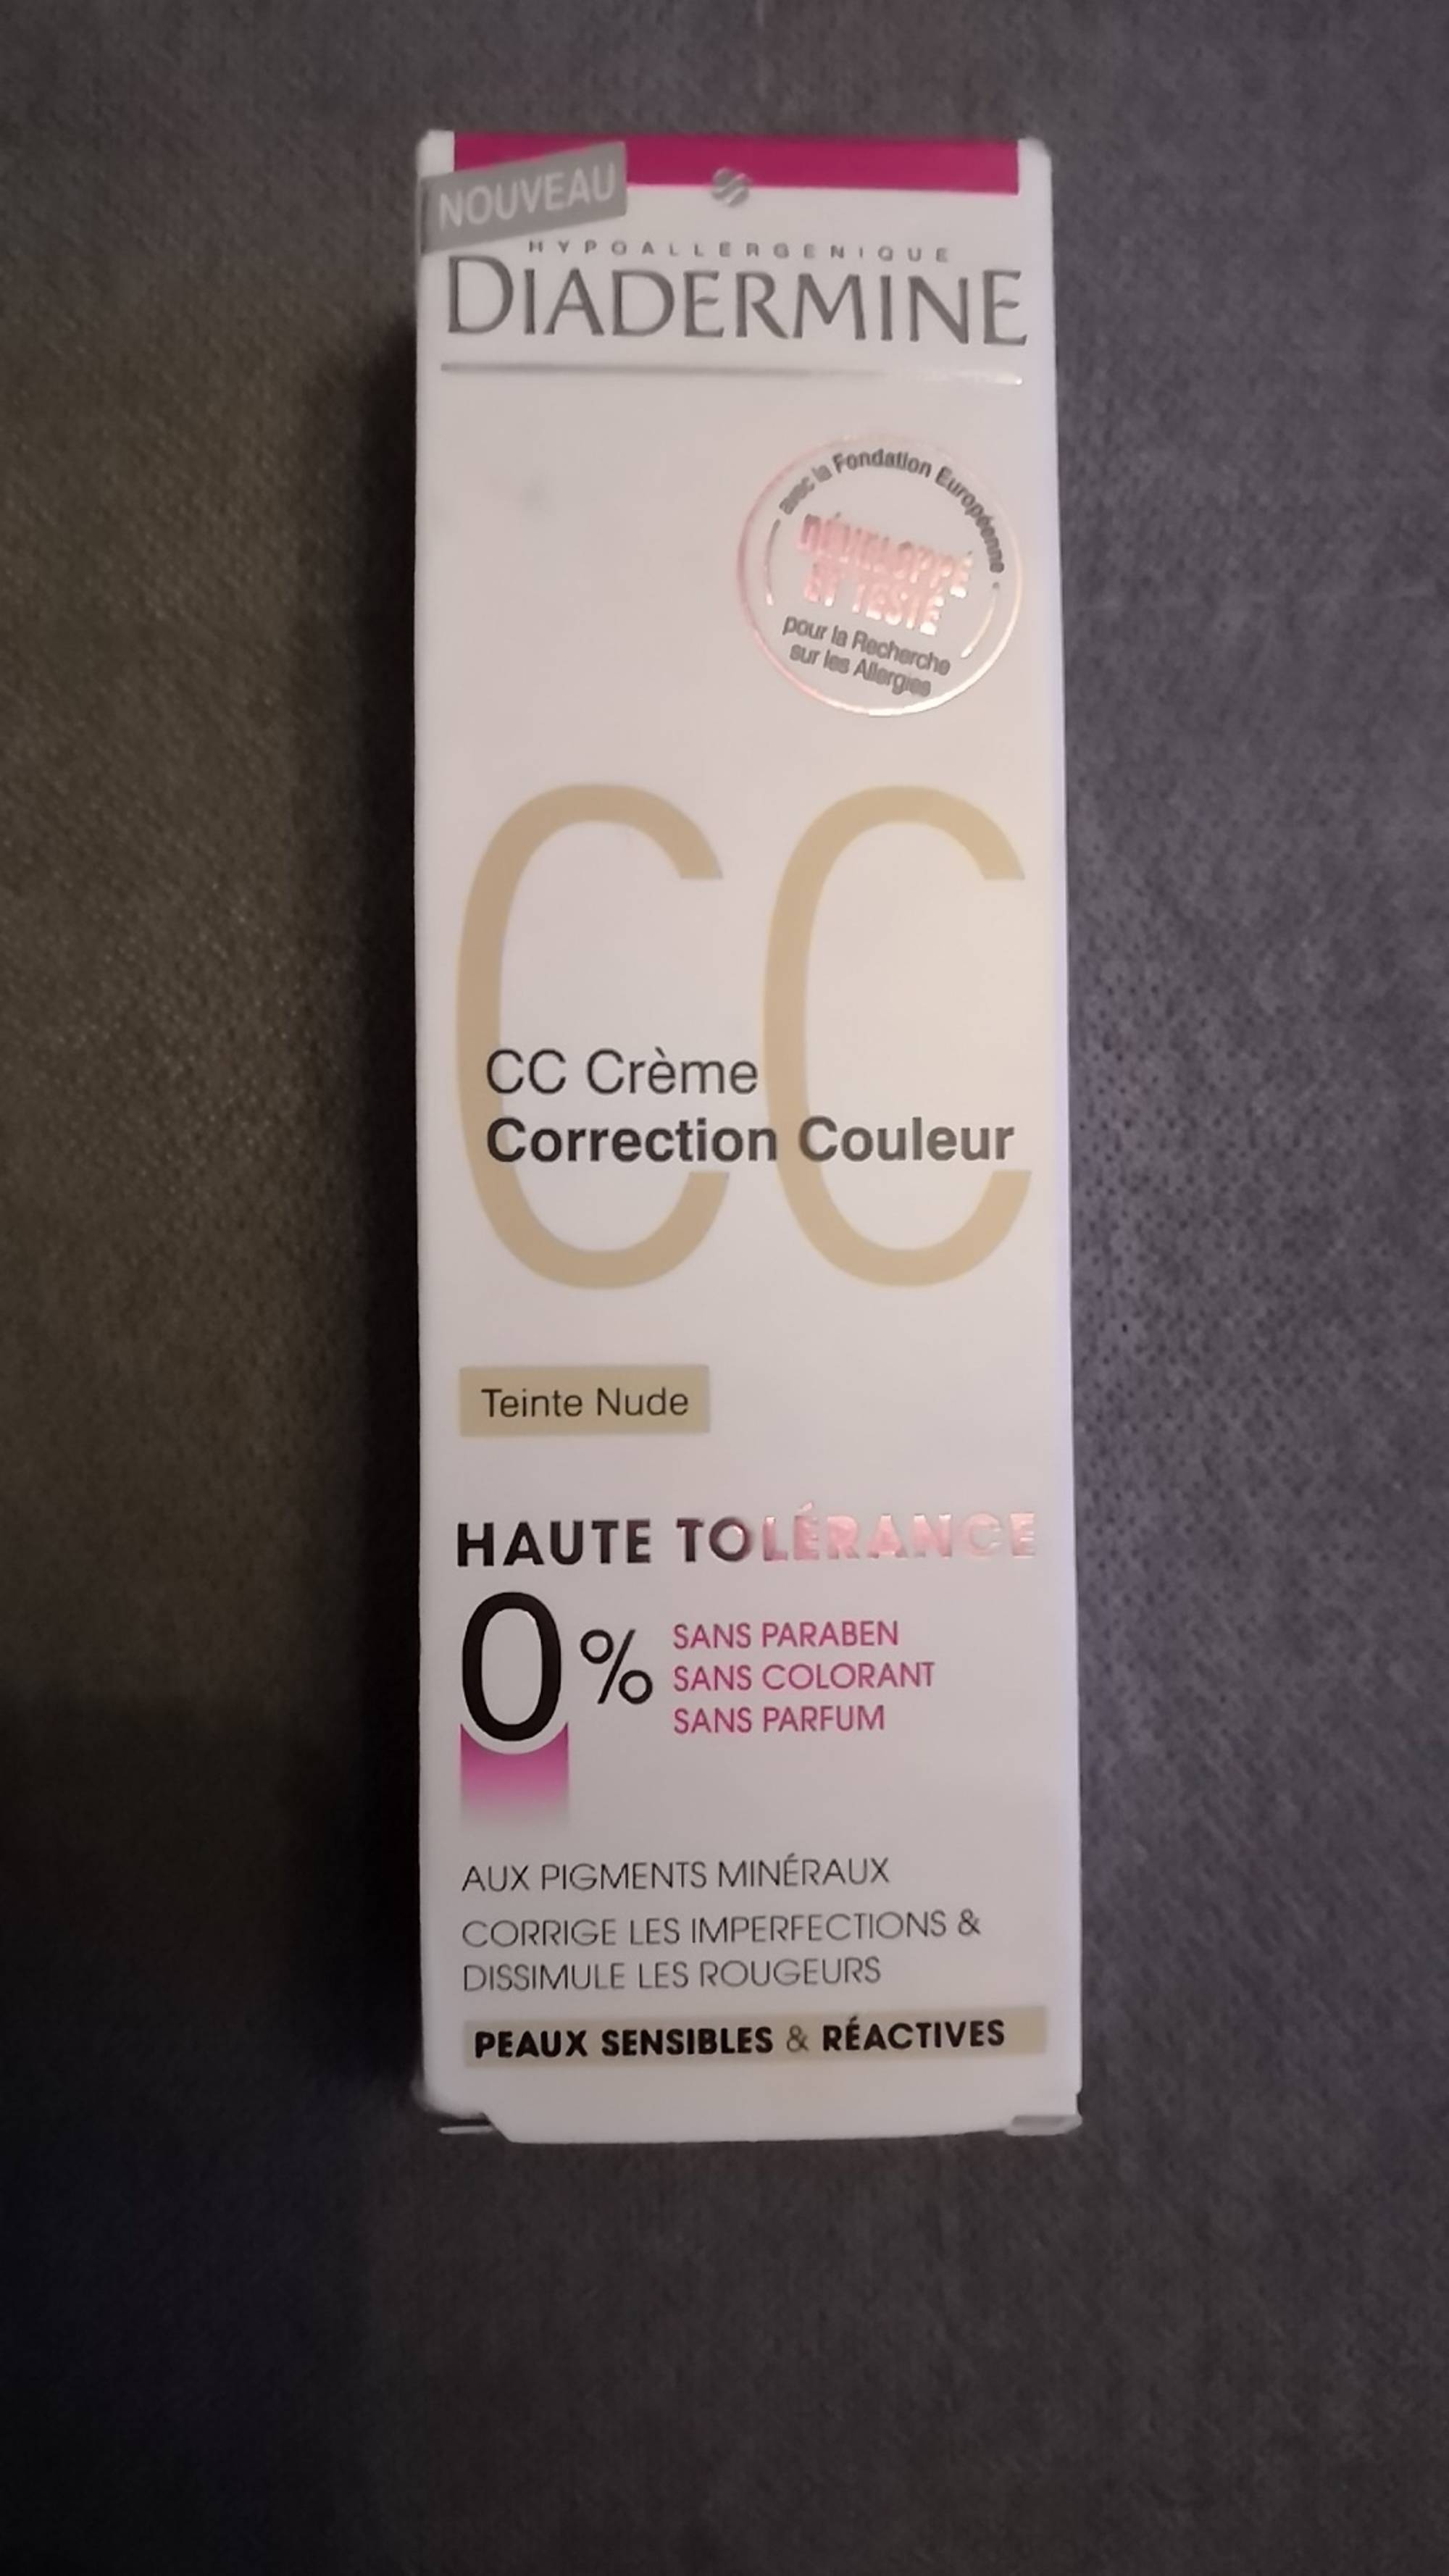 DIADERMINE - CC crème - Correction couleur Teinte nude